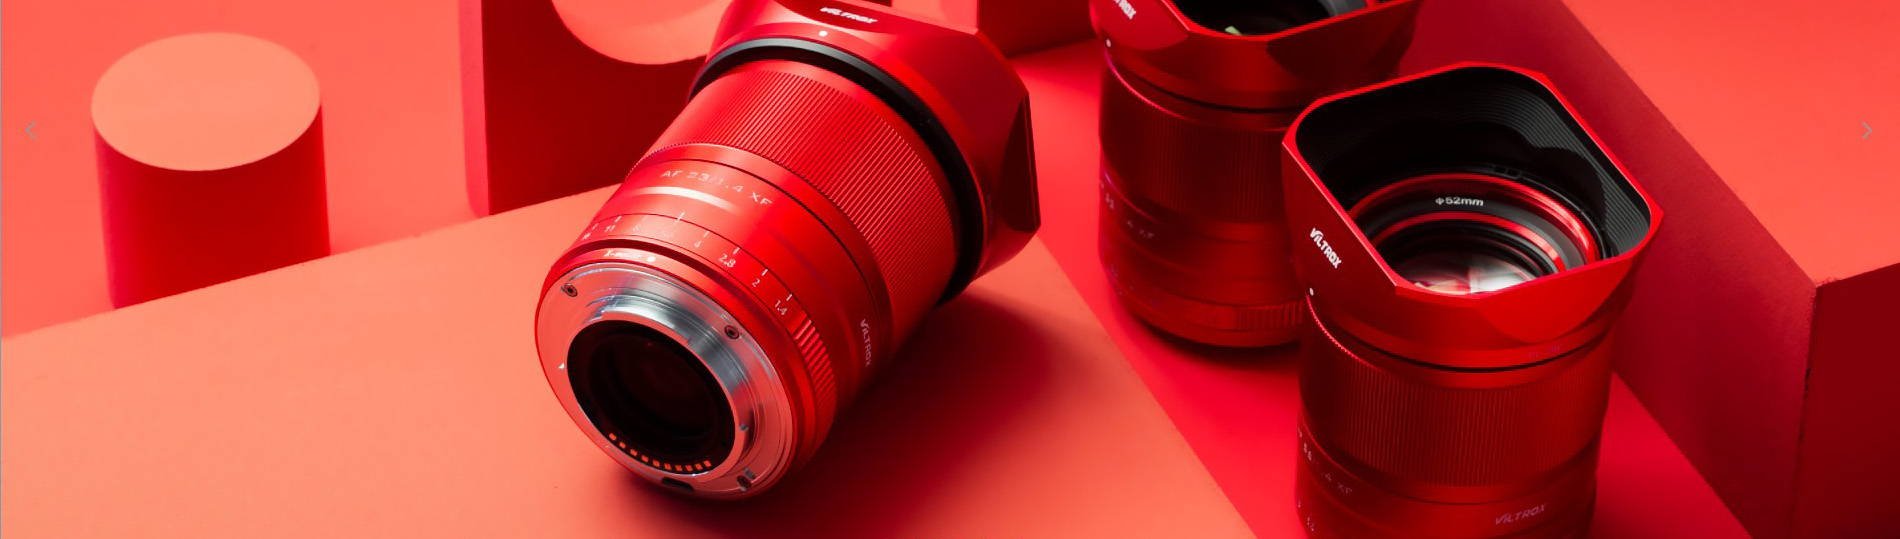 Viltrox Red color lens